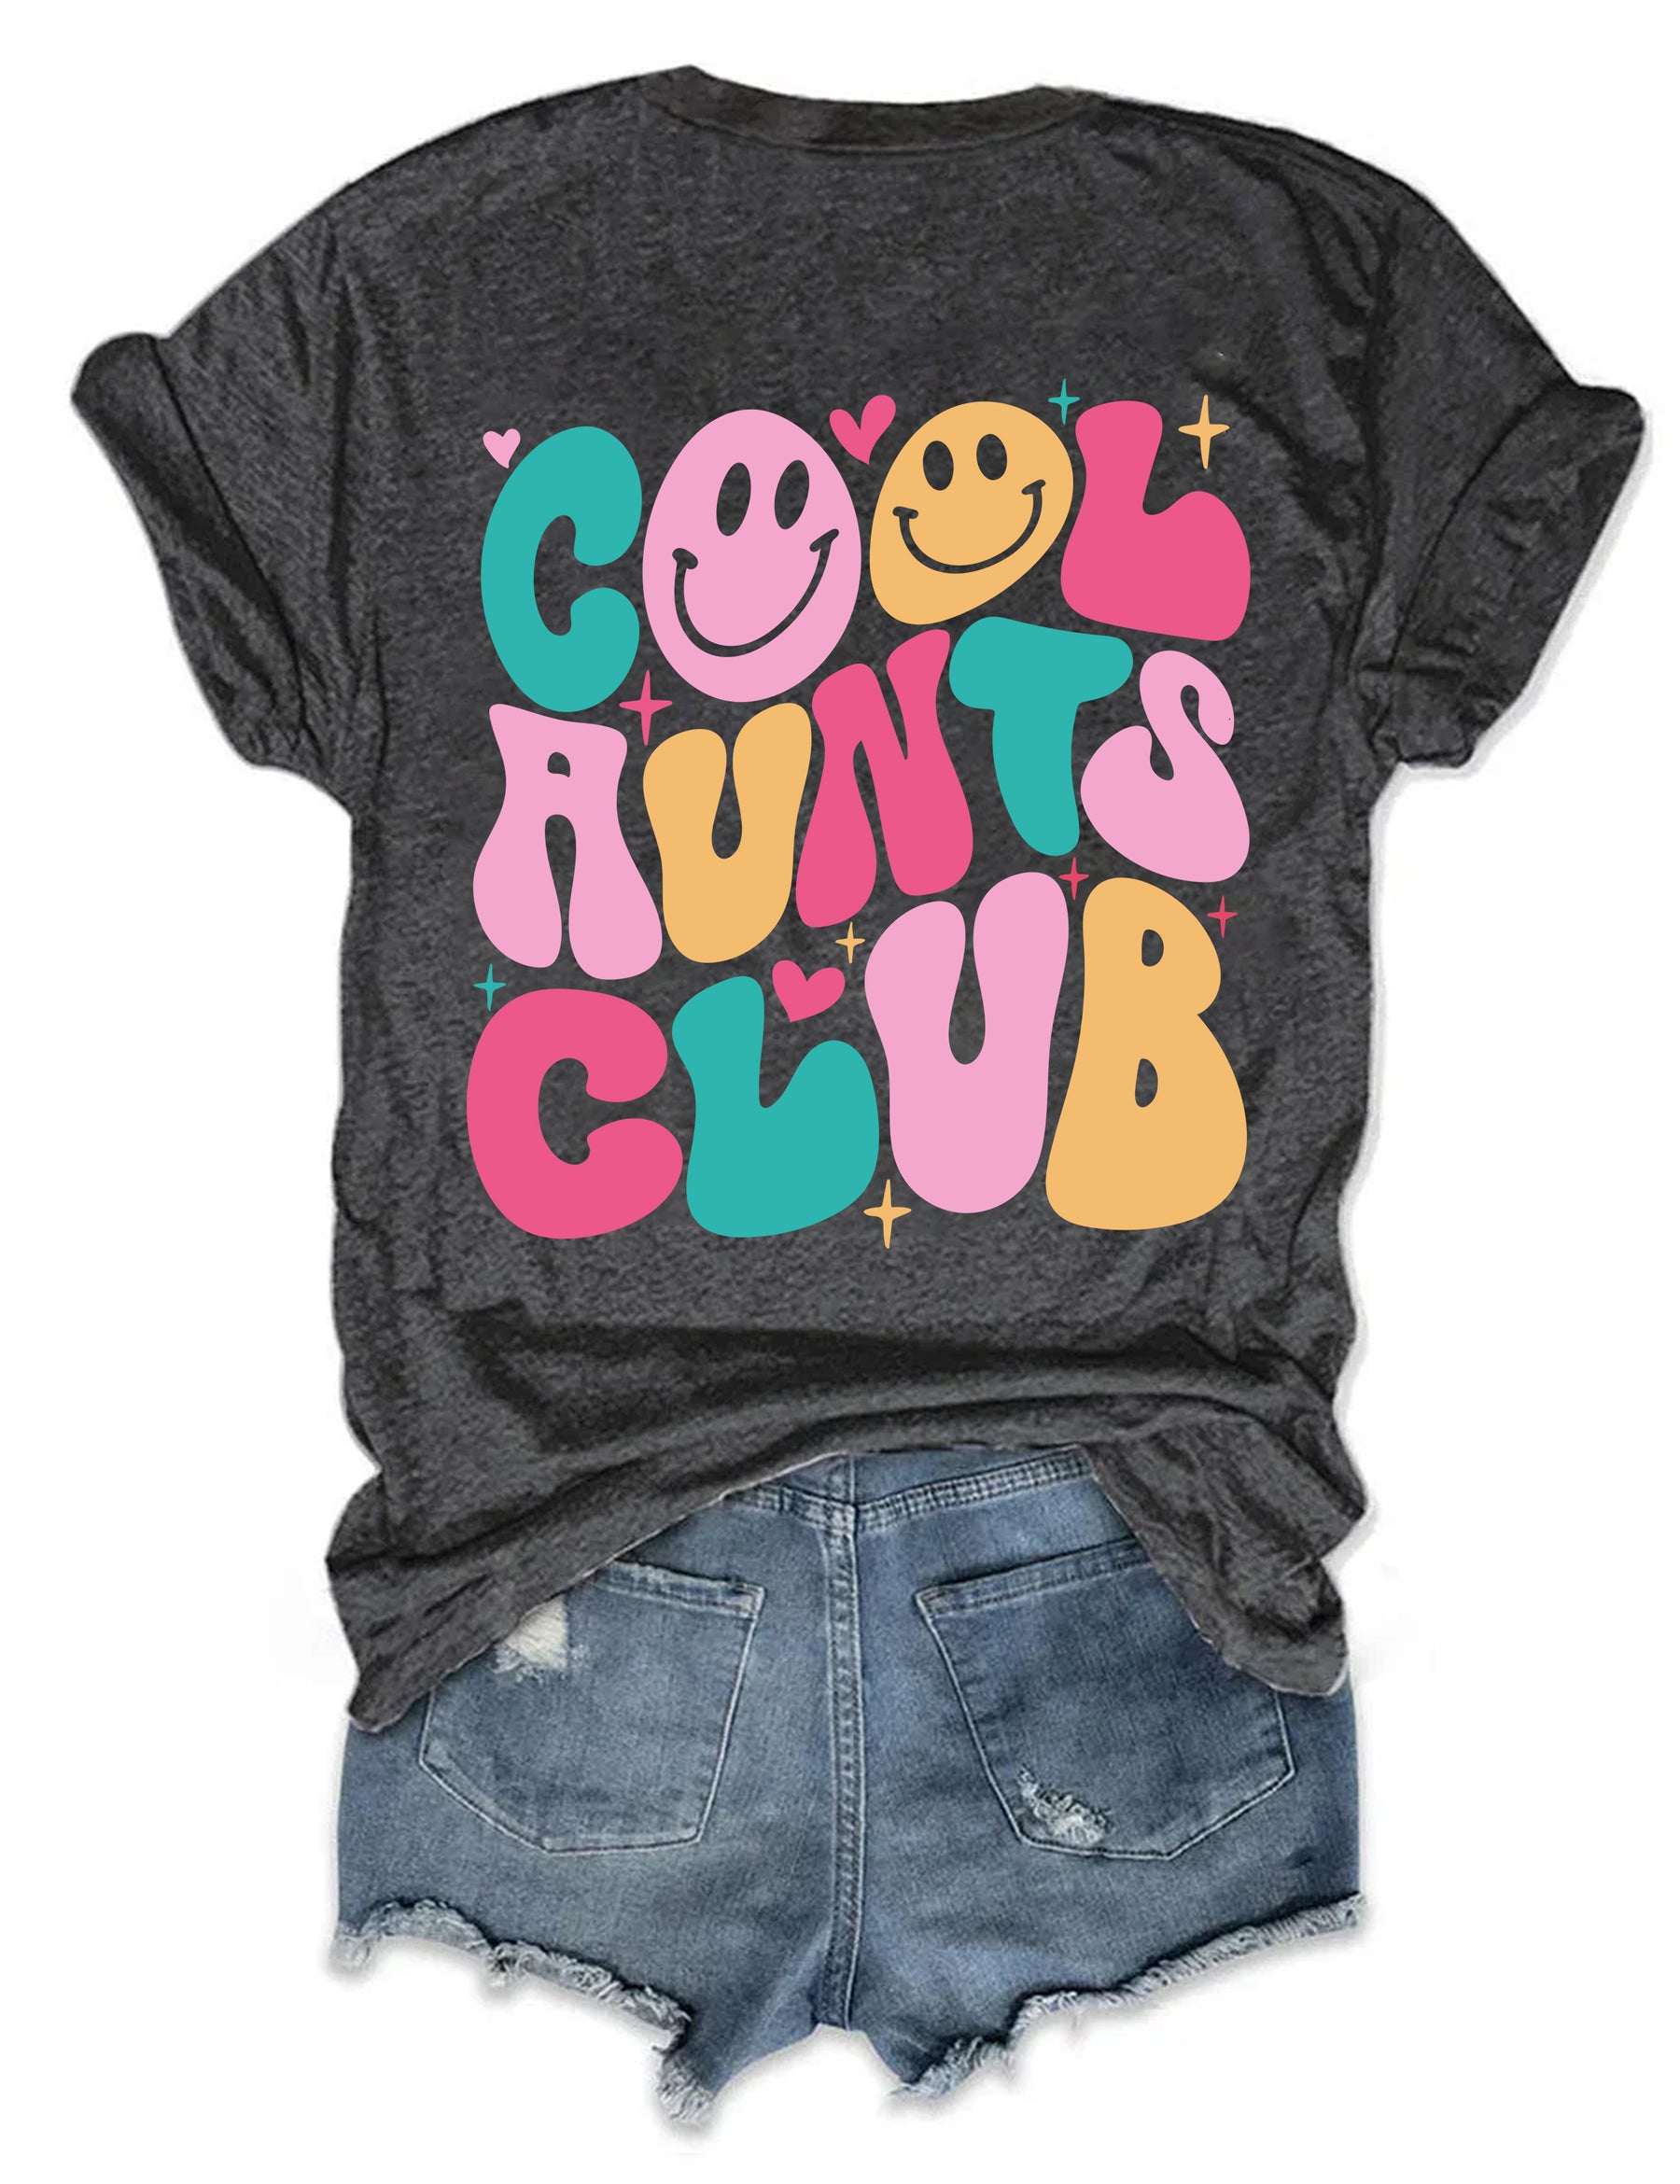 T-shirt de club de tante cool